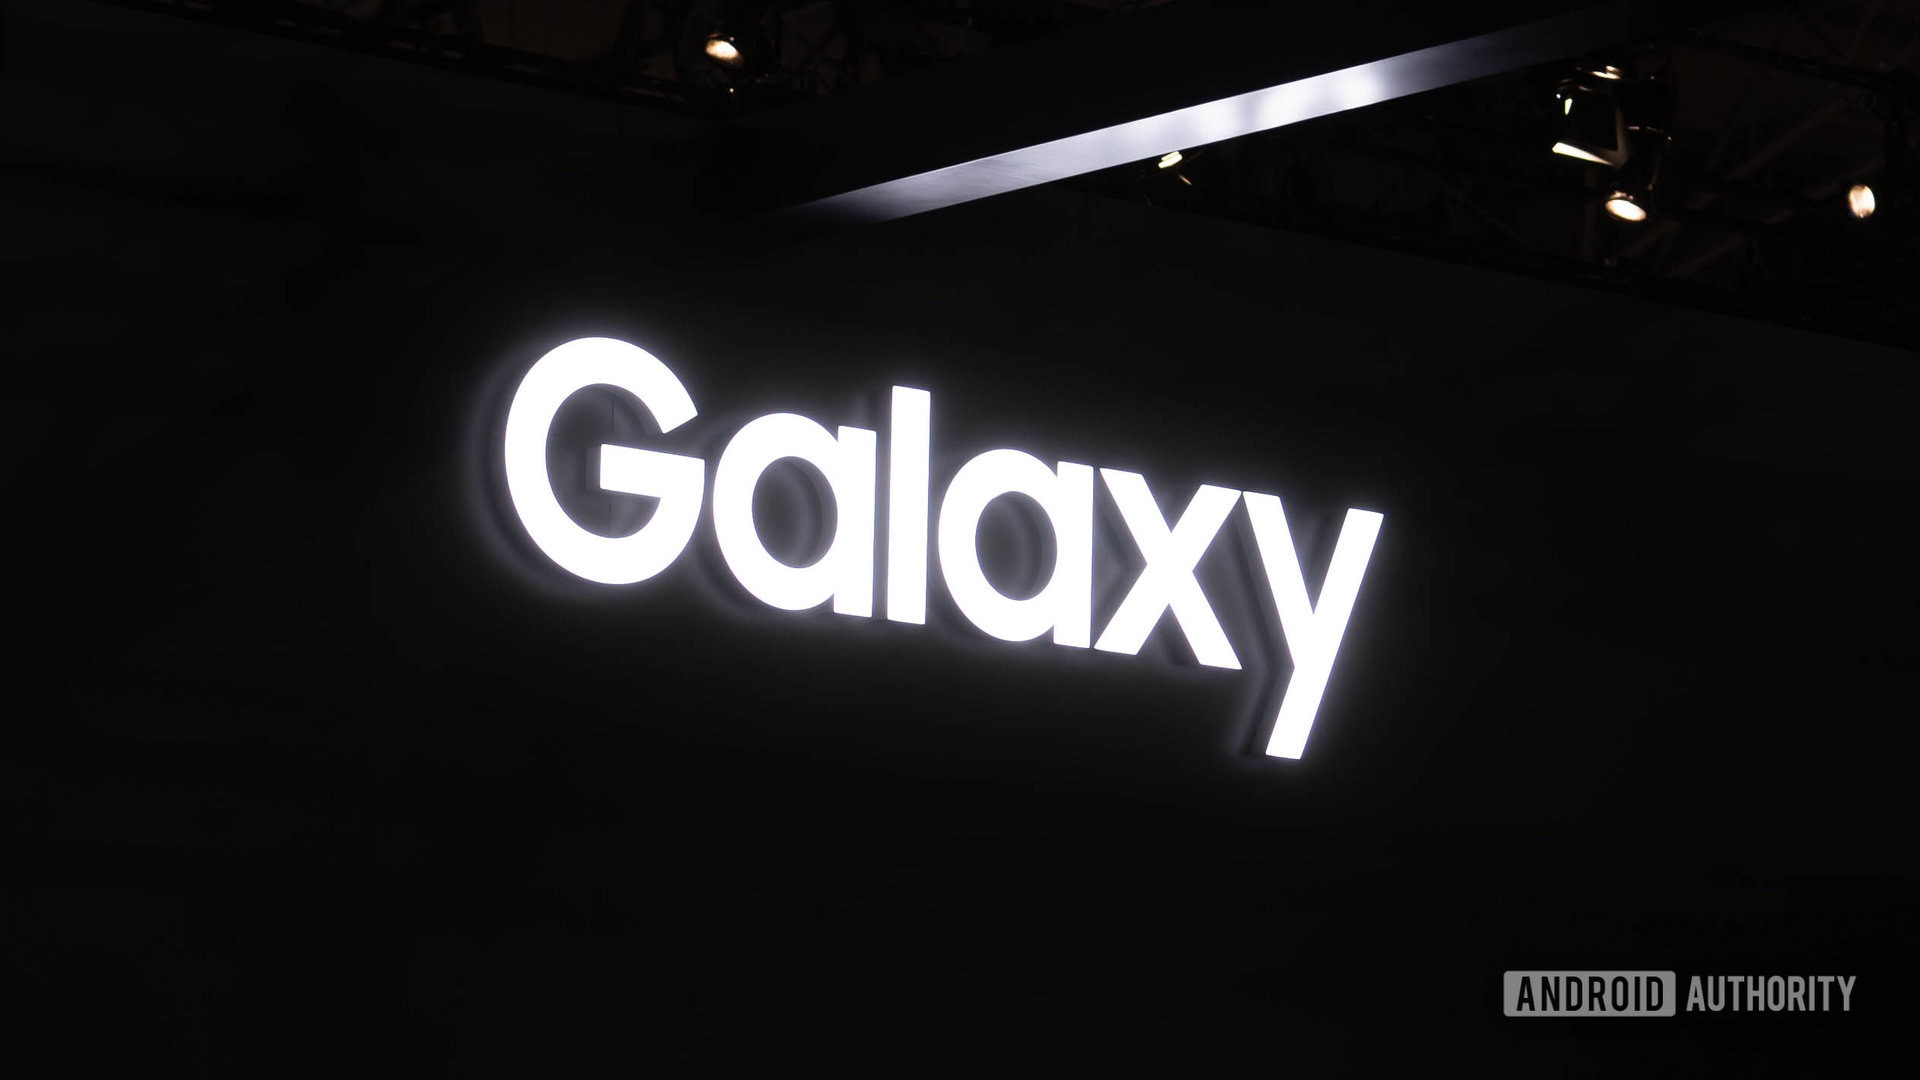 https://www.androidauthority.com/wp-content/uploads/2022/03/Samsung-Galaxy-logo.jpg